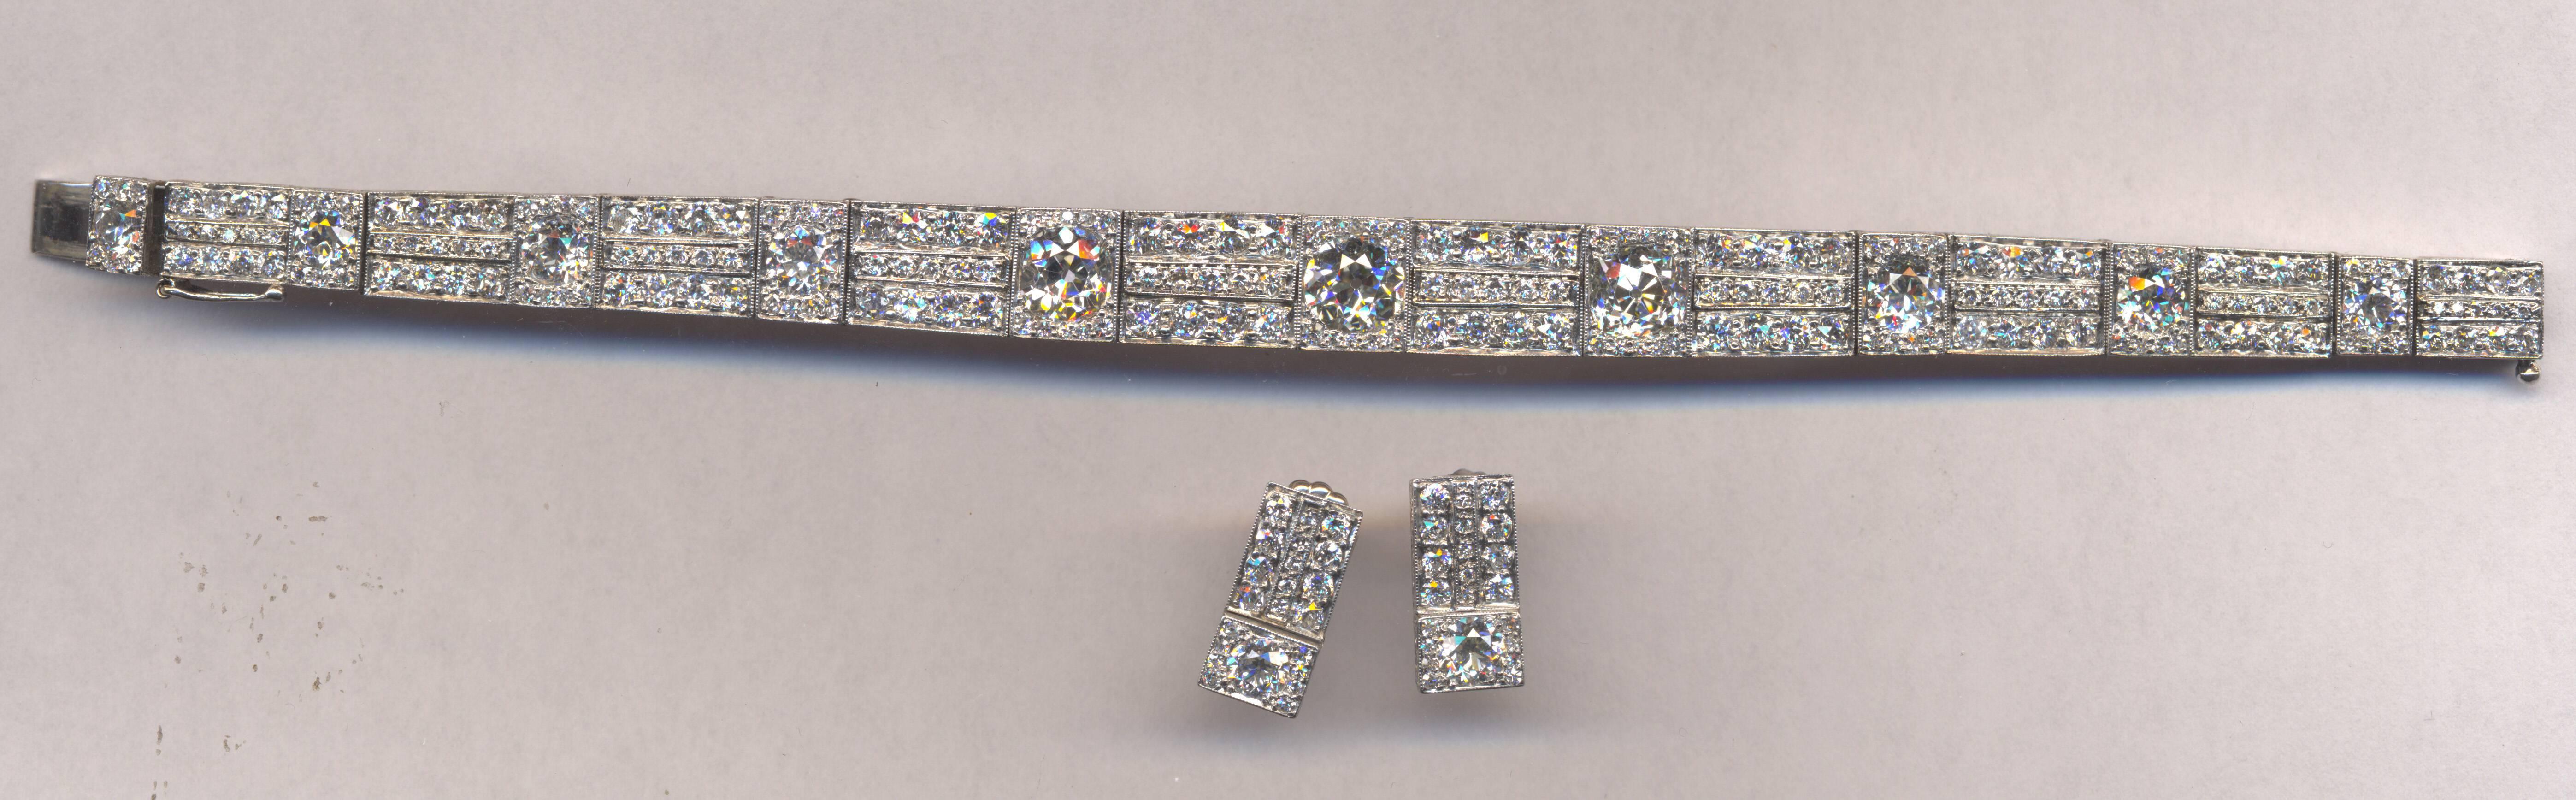 Important Art Deco Diamond Bracelet and Bonus Earrings to Boot 3